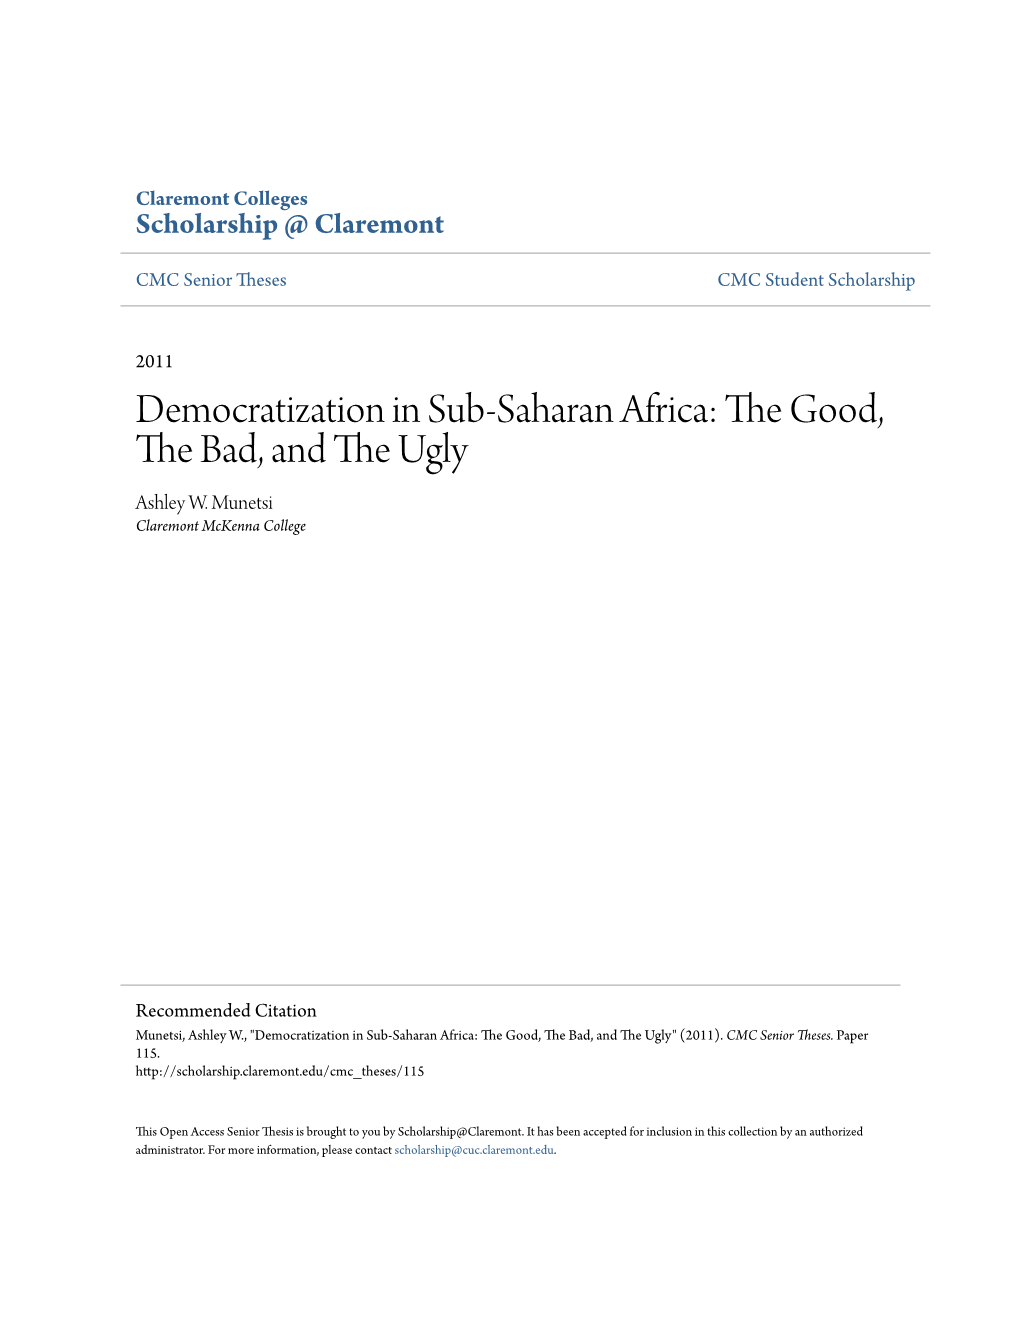 Democratization in Sub-Saharan Africa: the Good, the Ab D, and the Glu Y Ashley W